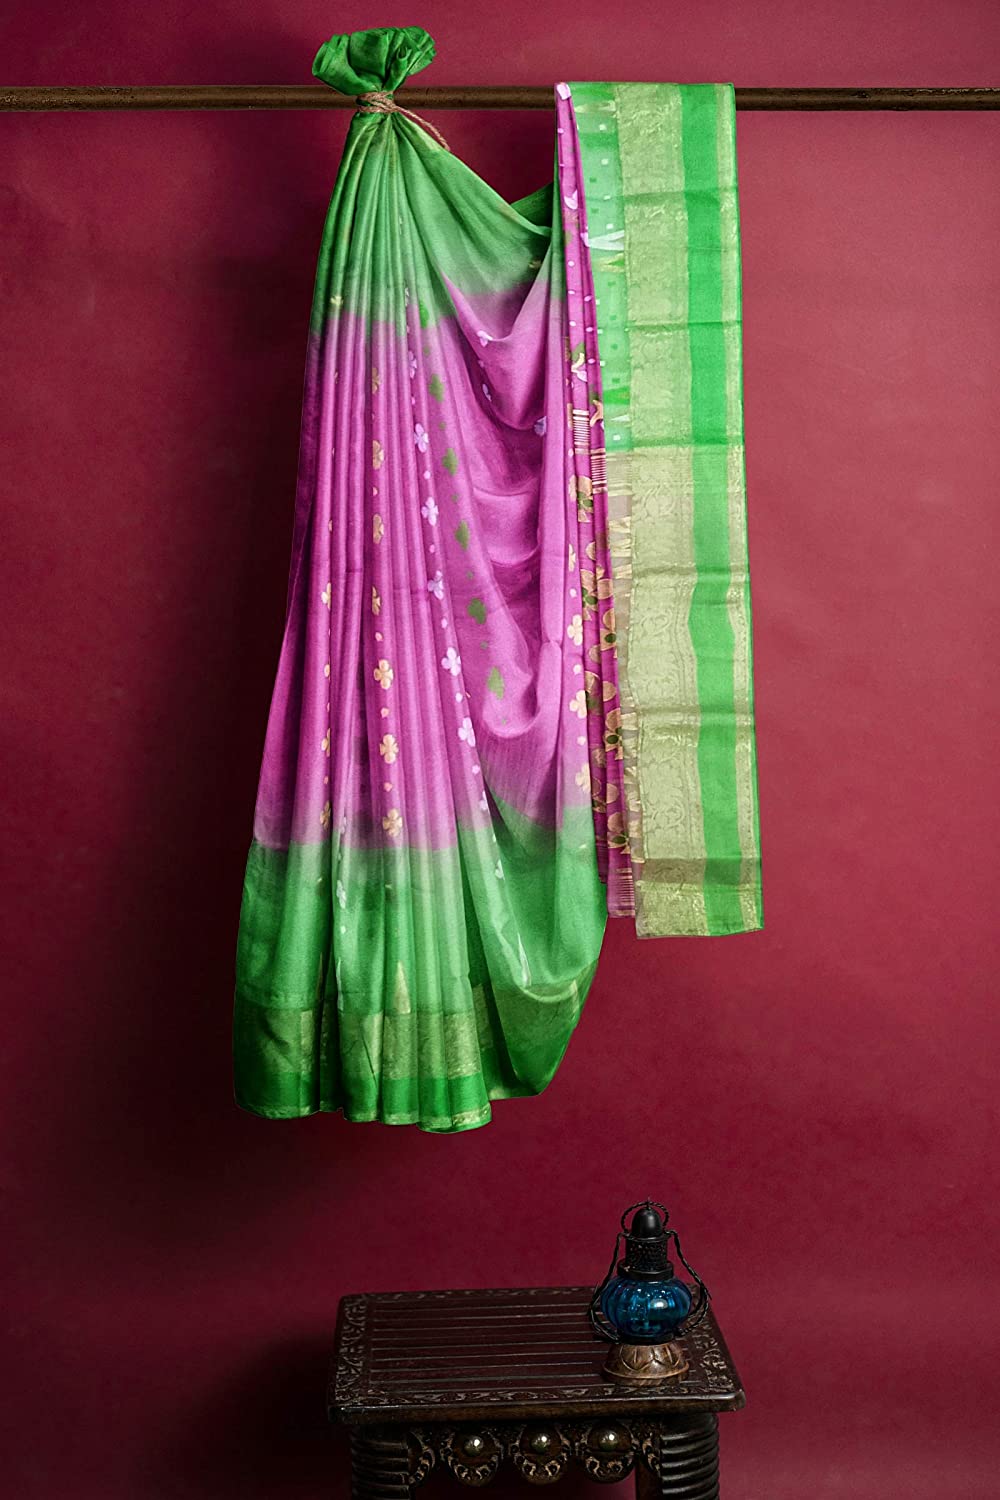 Pradip Fabrics Ethnic Women's Tant Silk Green, Pink Color Saree